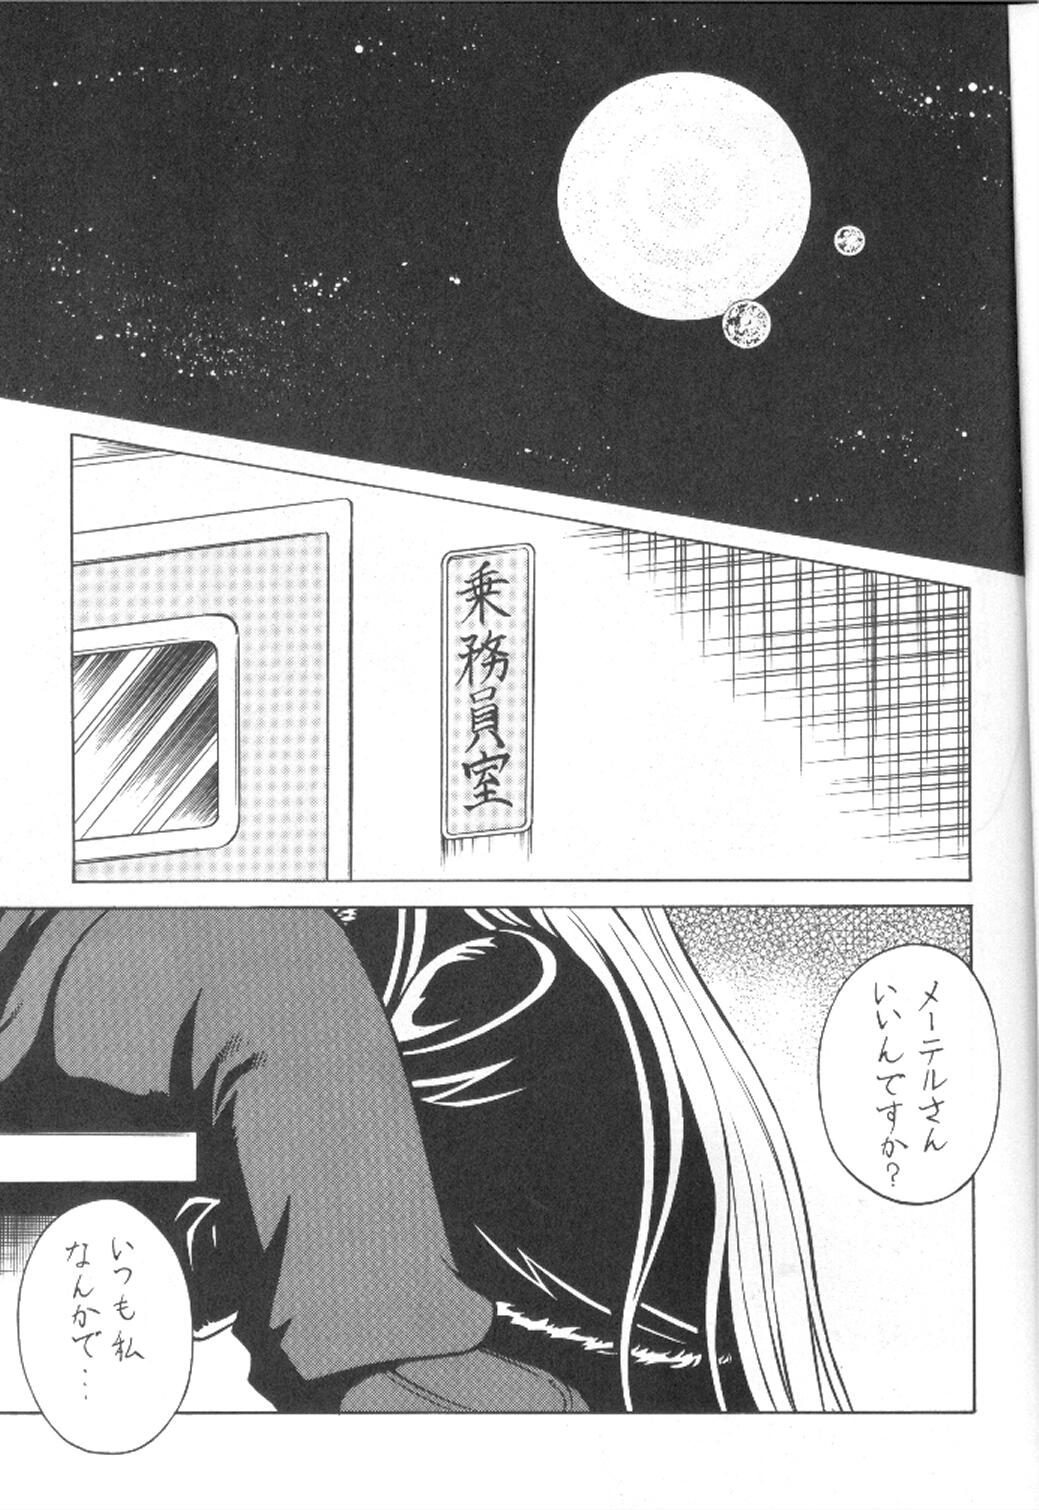 (C66) [サークル太平天国 (改多丸)] NIGHT HEAD 999 (銀河鉄道999)